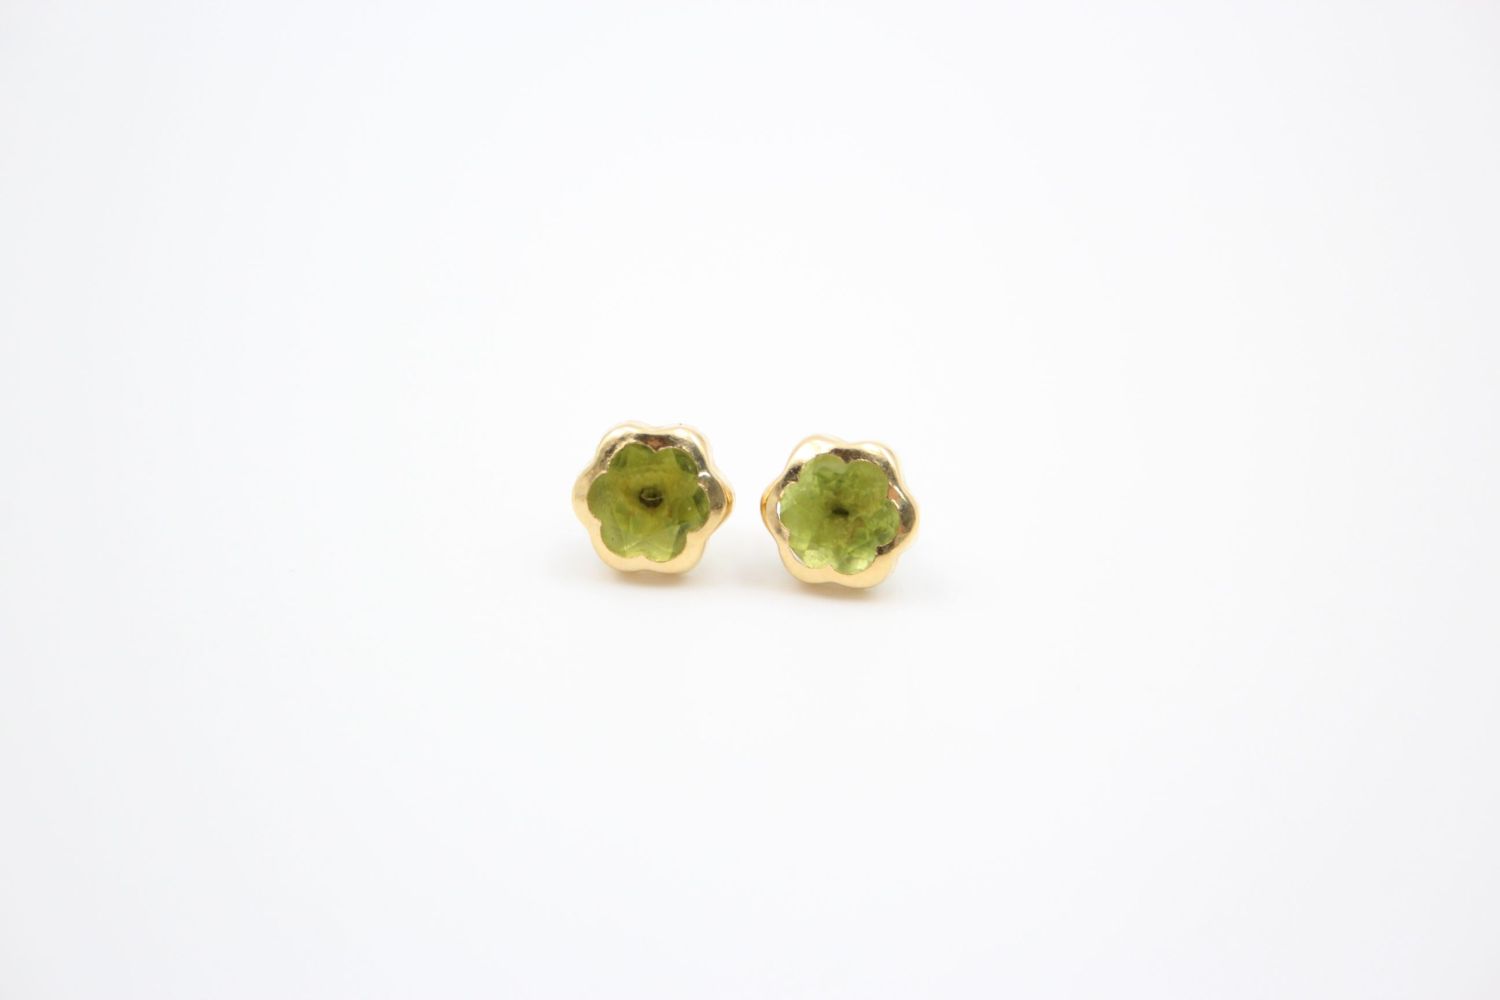 2 x 9ct gold gemstone stud earrings 1.6 grams gross - Image 2 of 10